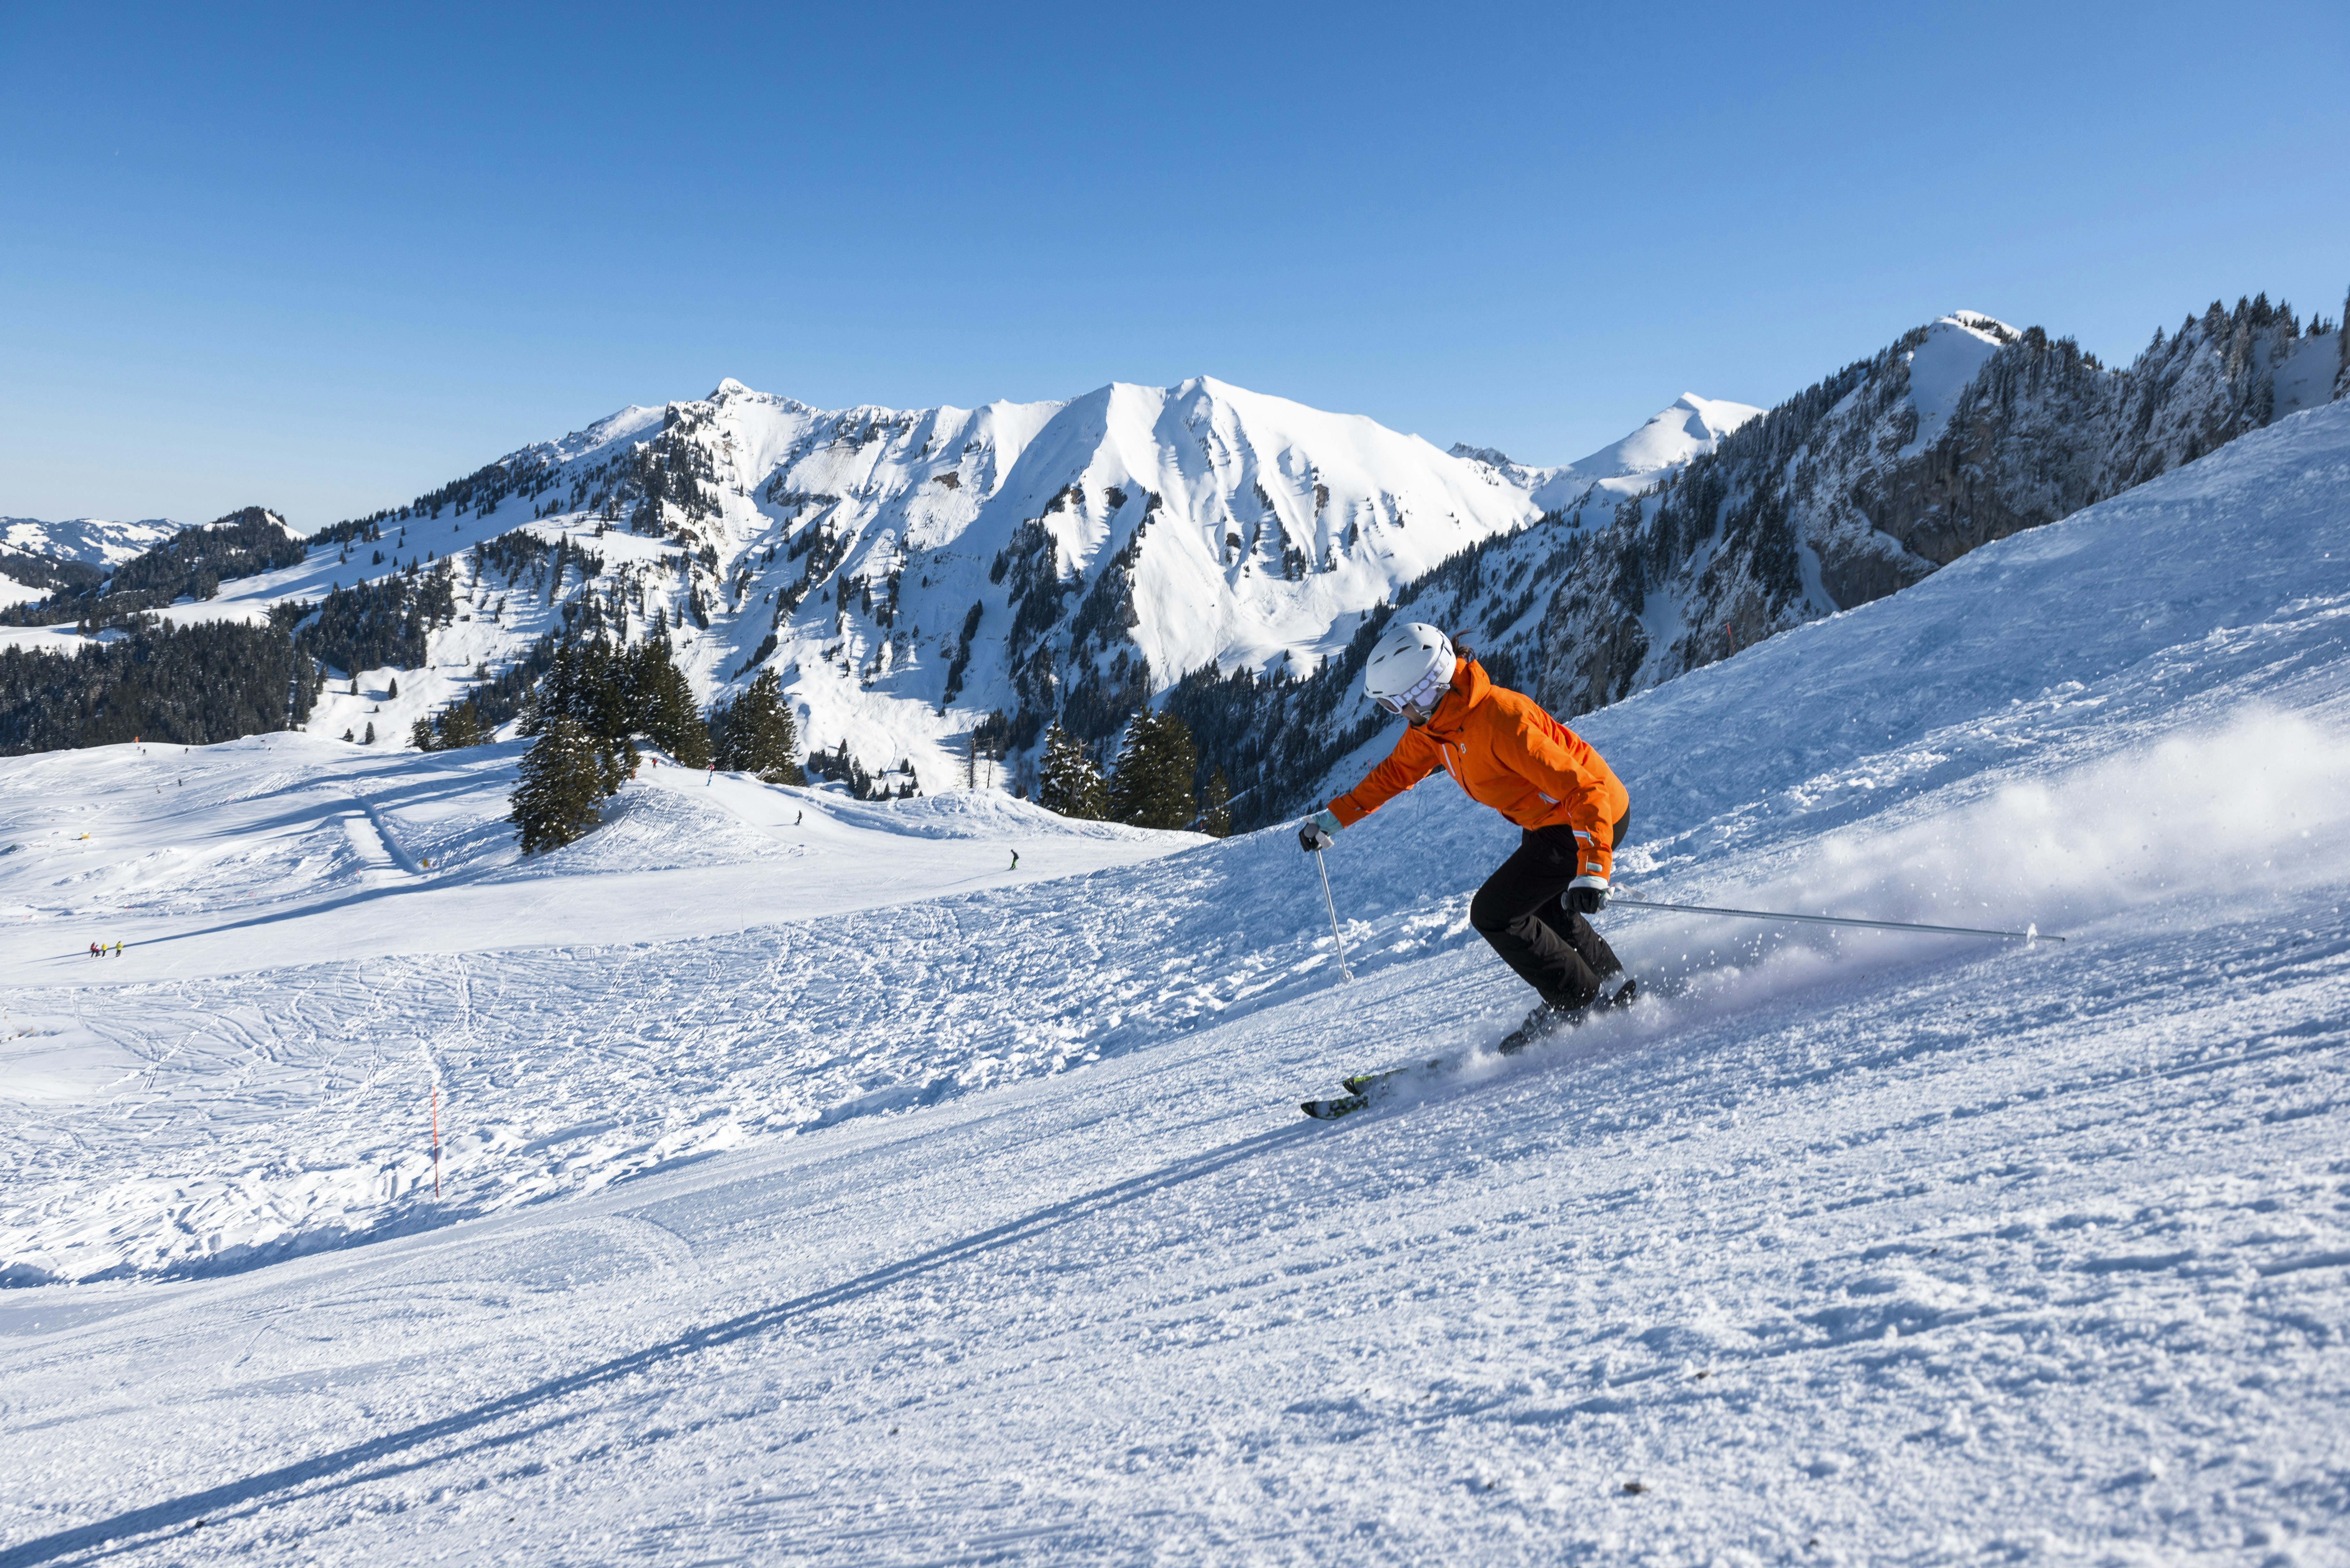 Carte de ski journalière - print@home